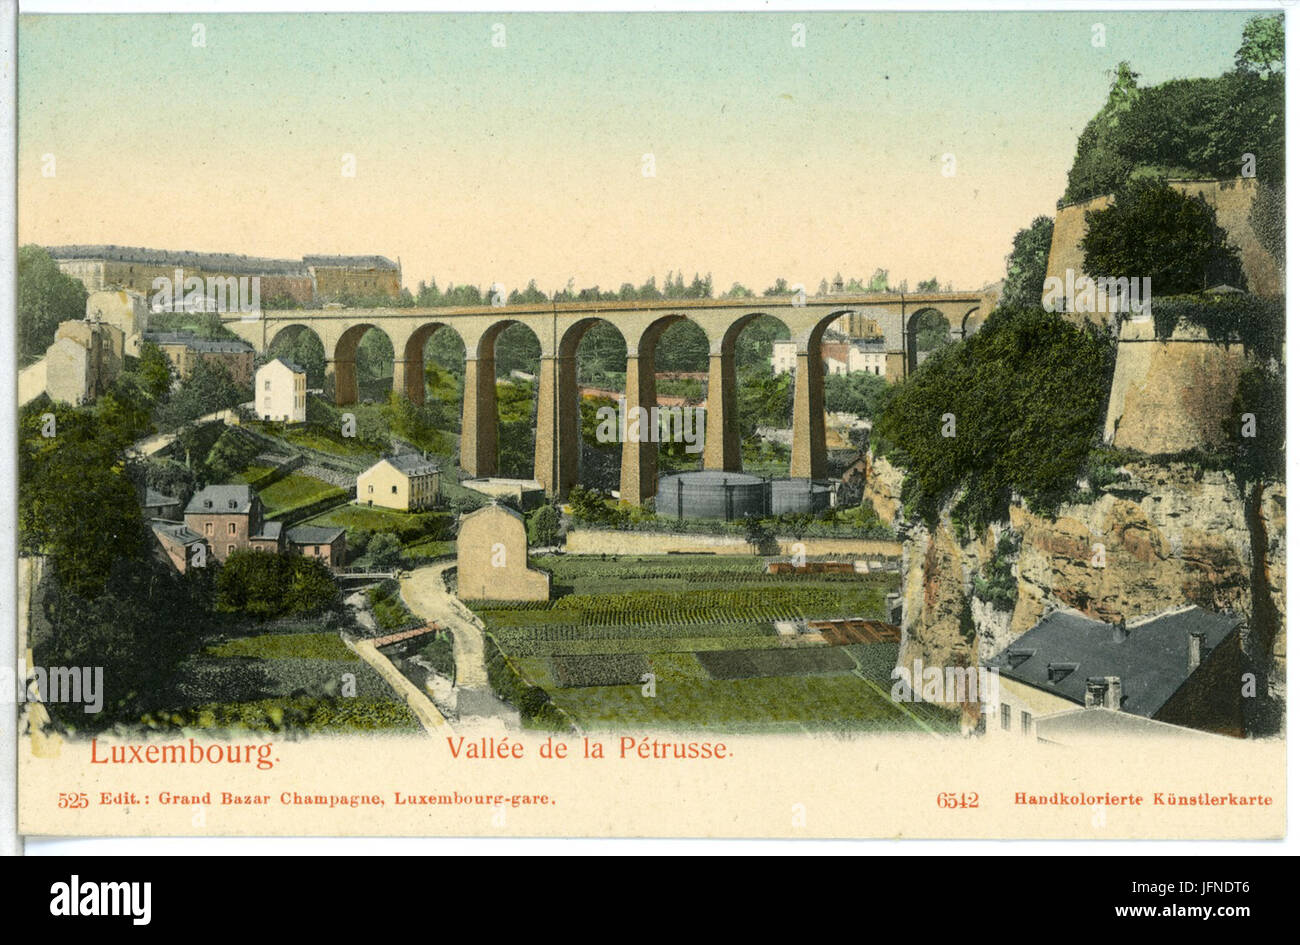 06542-Luxemburg-1905-Vallee de la Petrusse-Brück & Sohn Kunstverlag Stock Photo